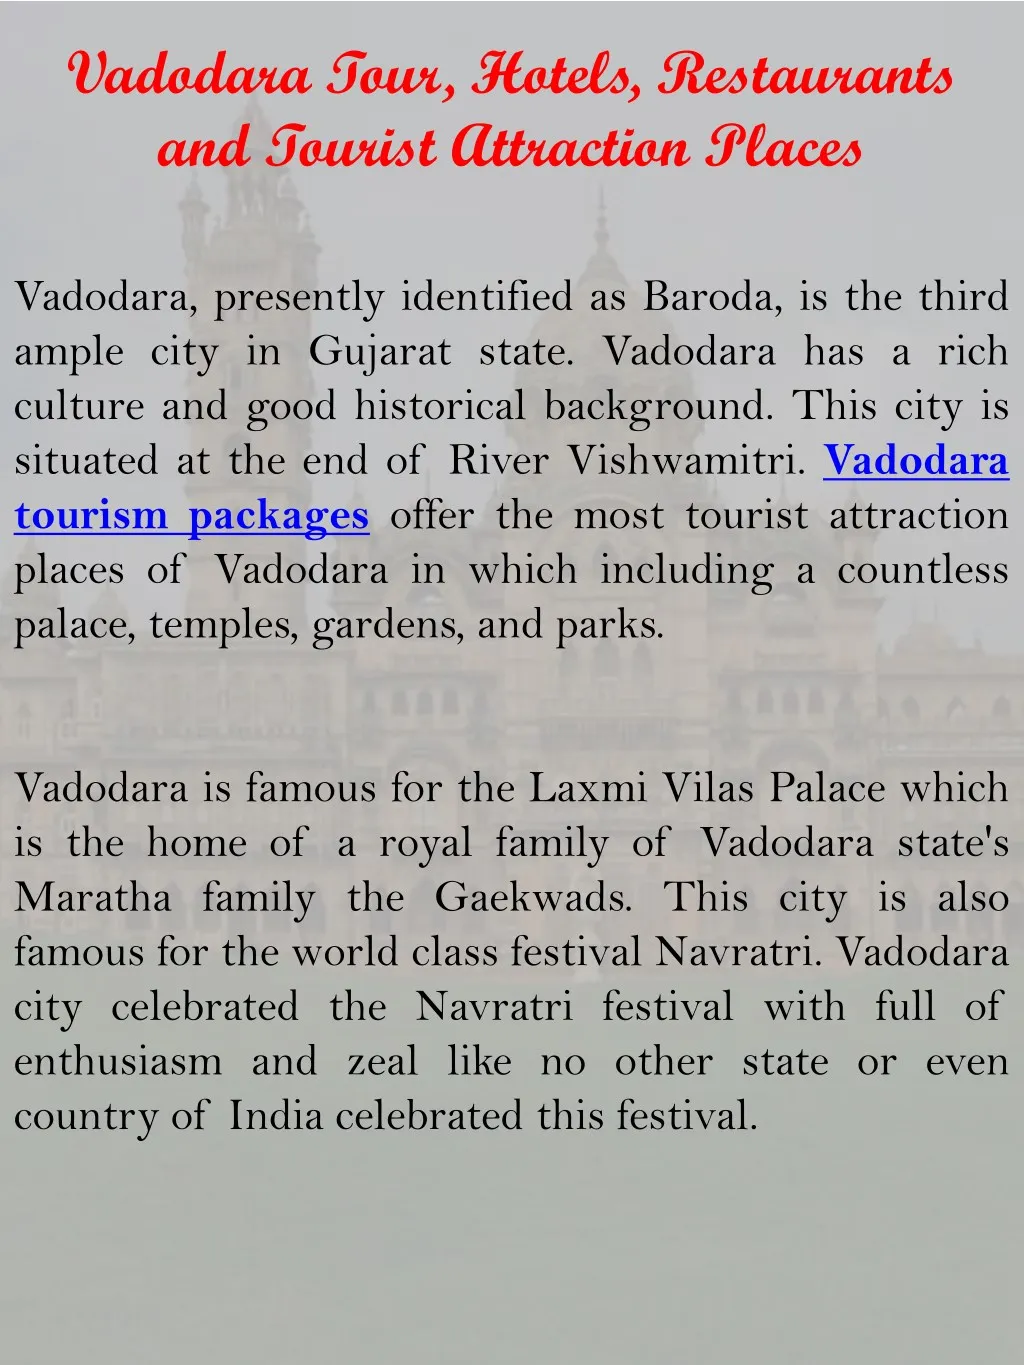 vadodara tour hotels restaurants and tourist